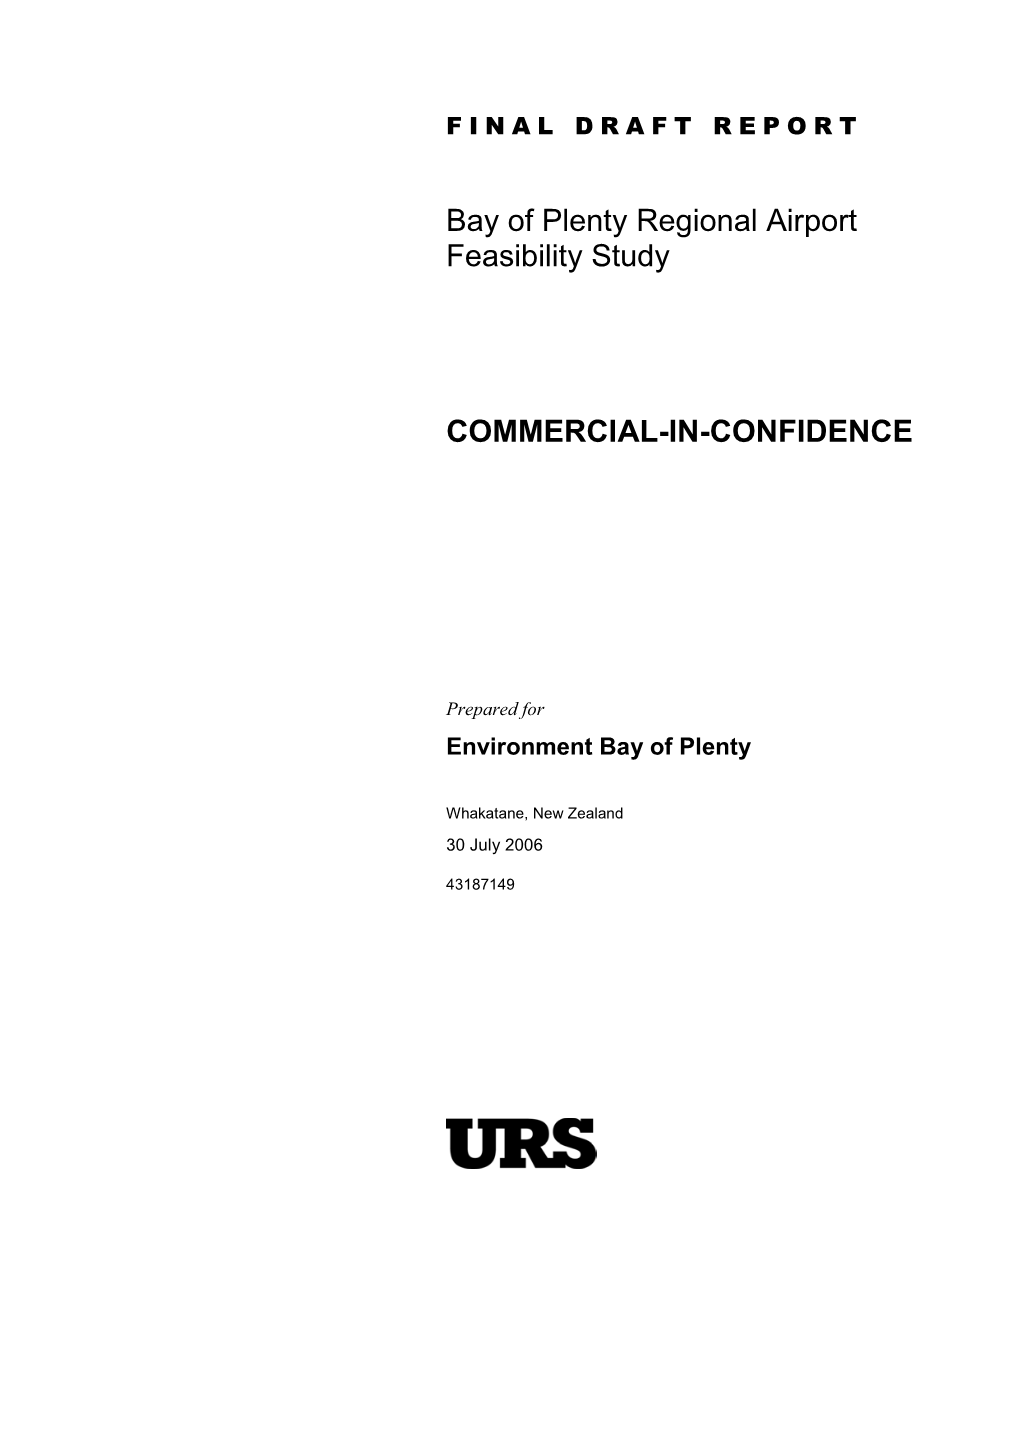 Bay of Plenty Regional Airport Feasibility Study